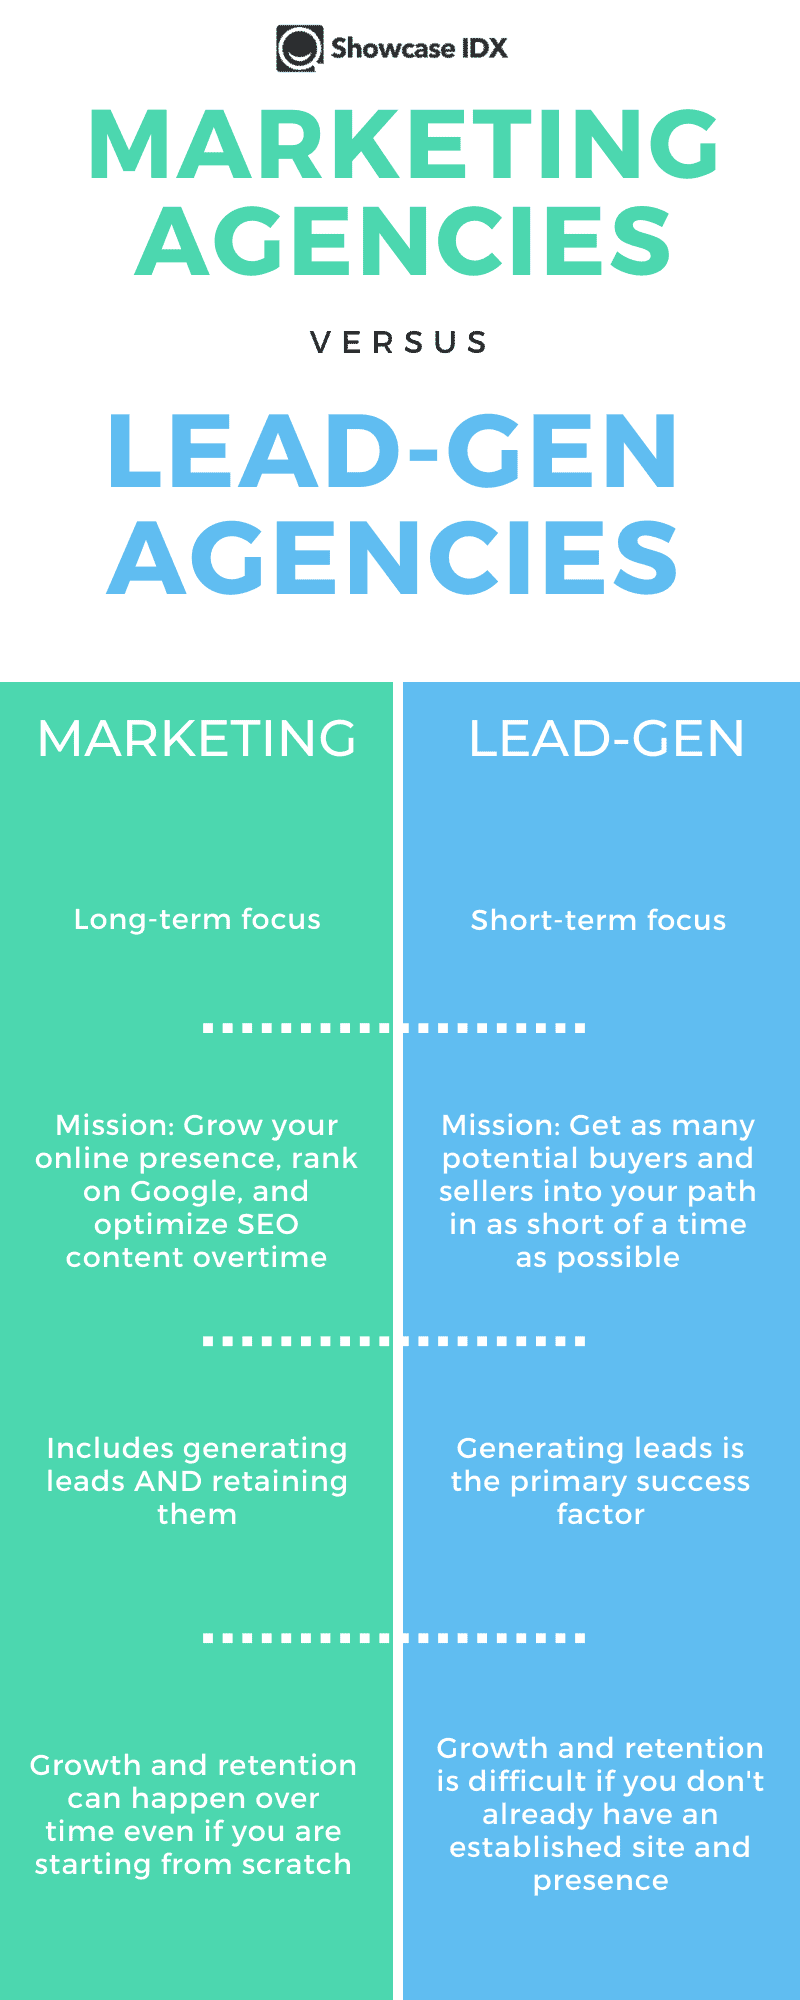 Real Estate marketing agencies vs lead generation agencies infographic